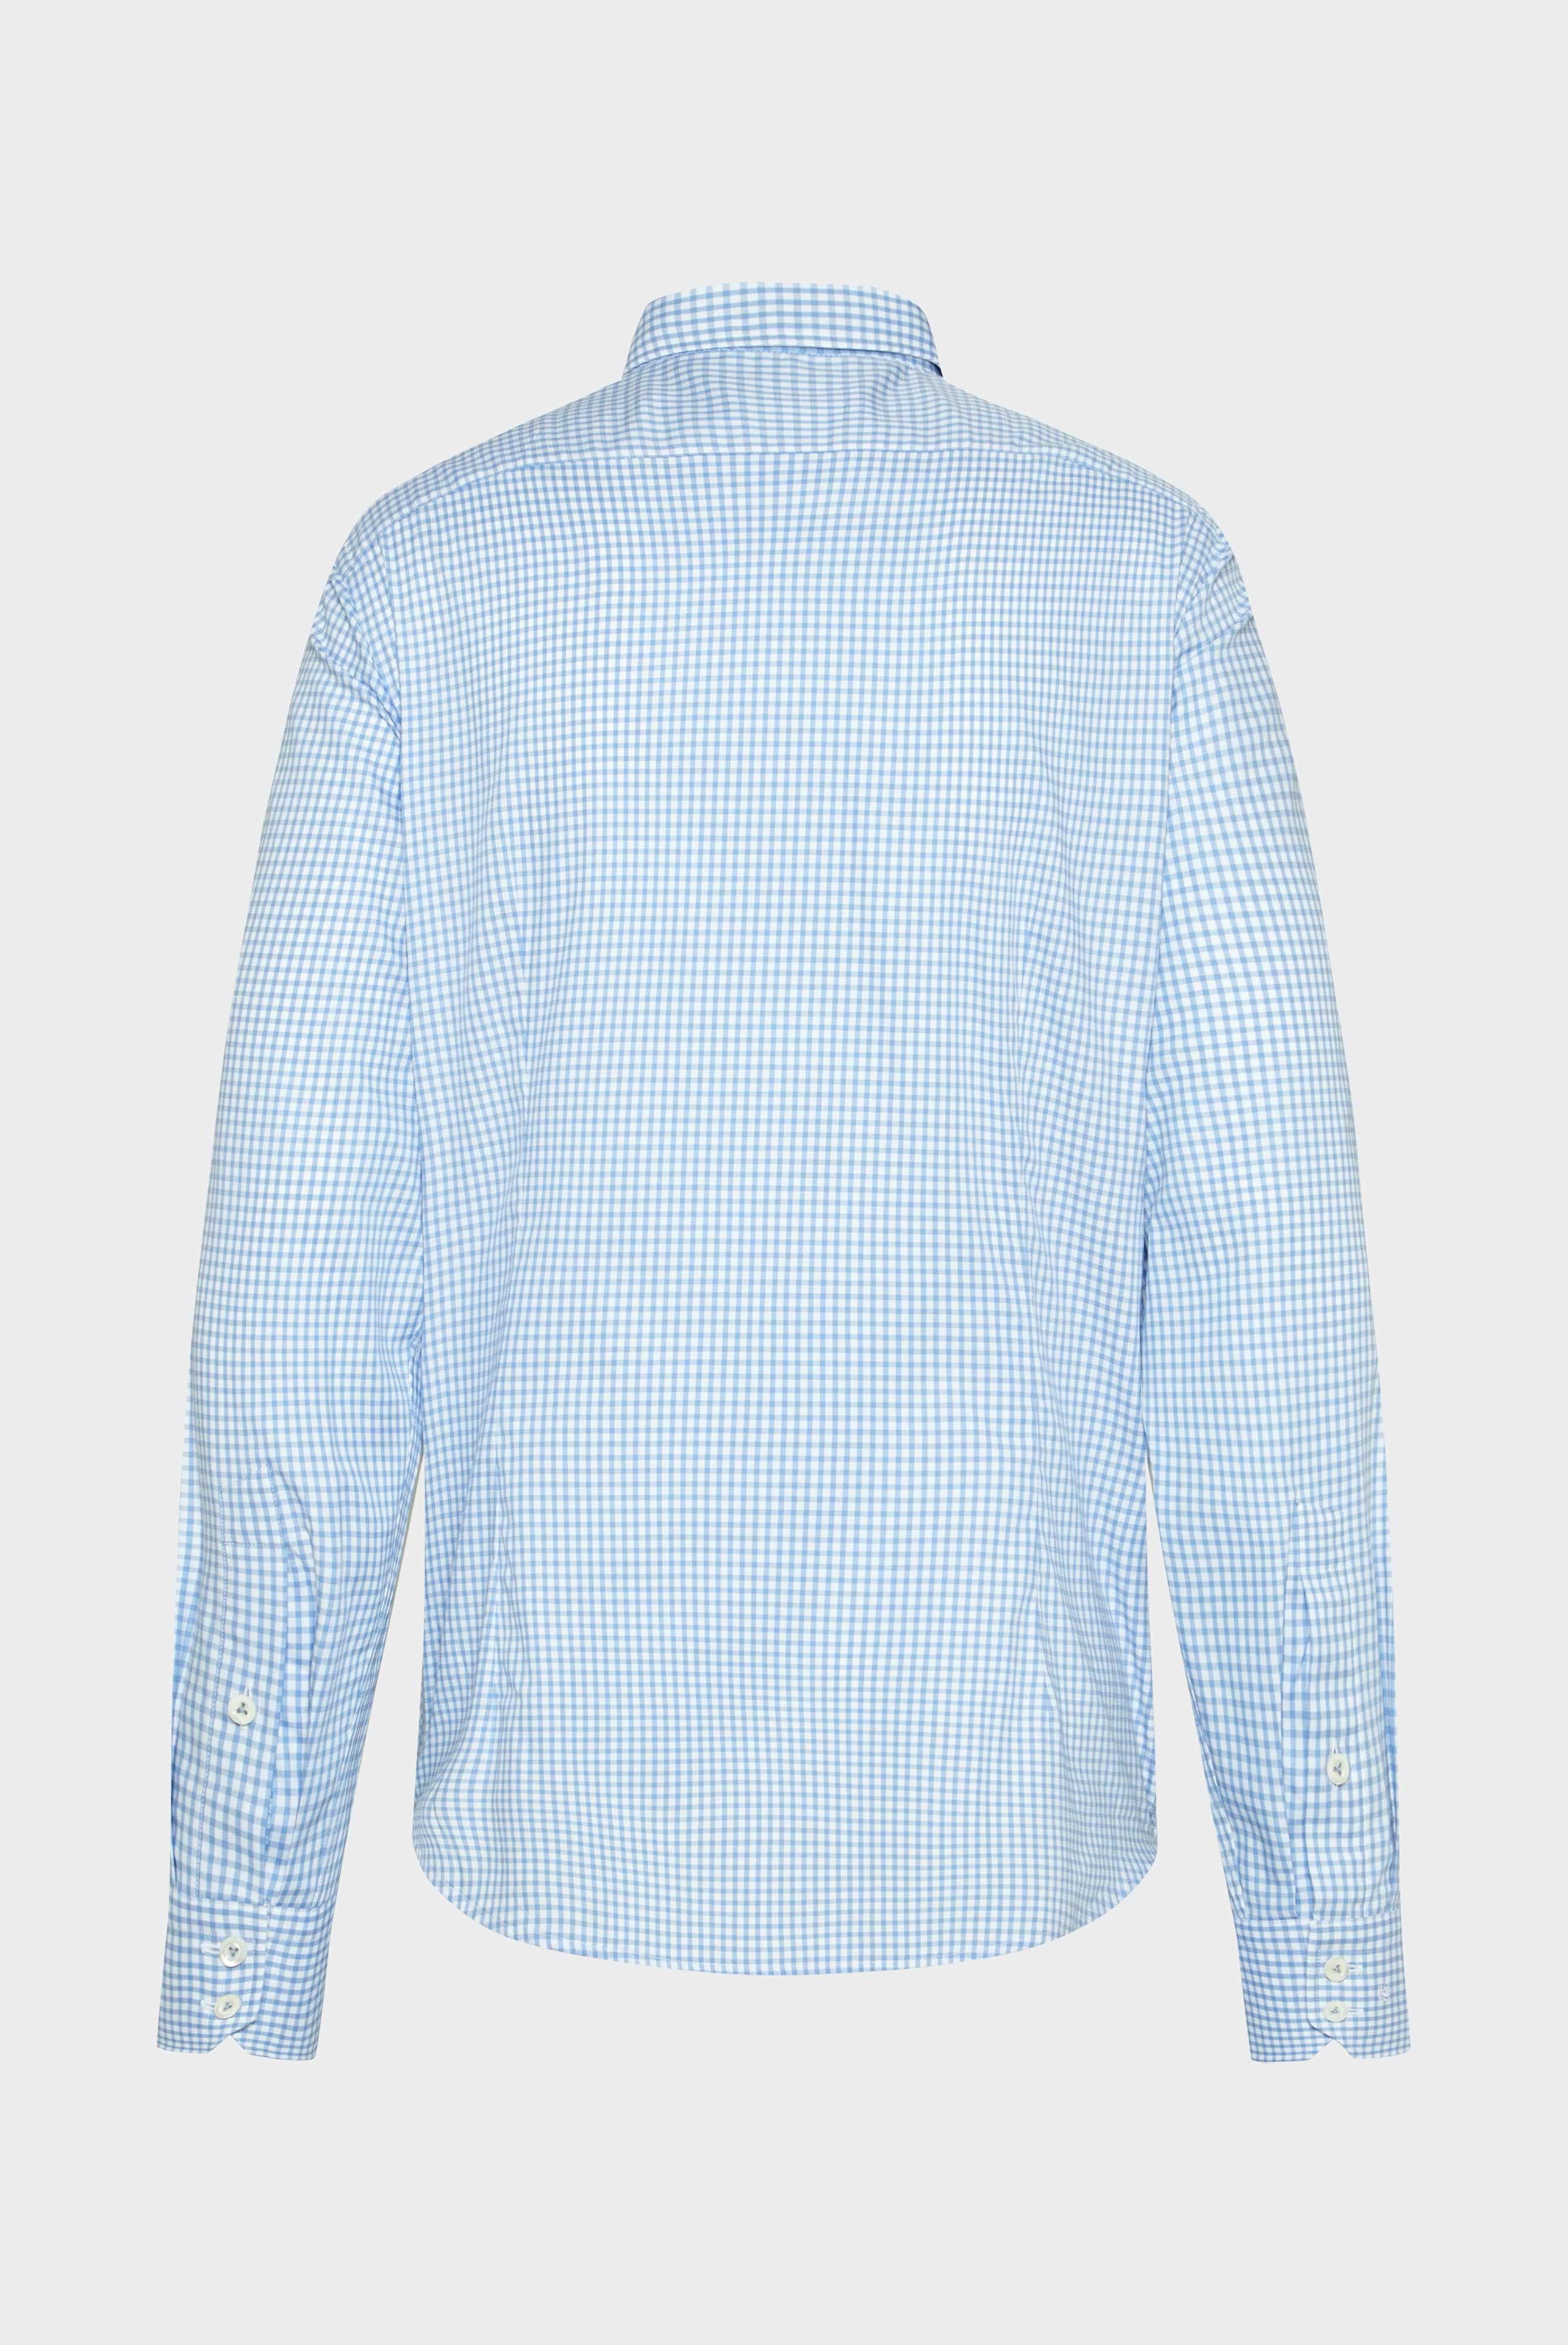 Easy Iron Shirts+Wrinkle-Free Shirt made of Organic Cotton+20.3281.NV.166011.720.37